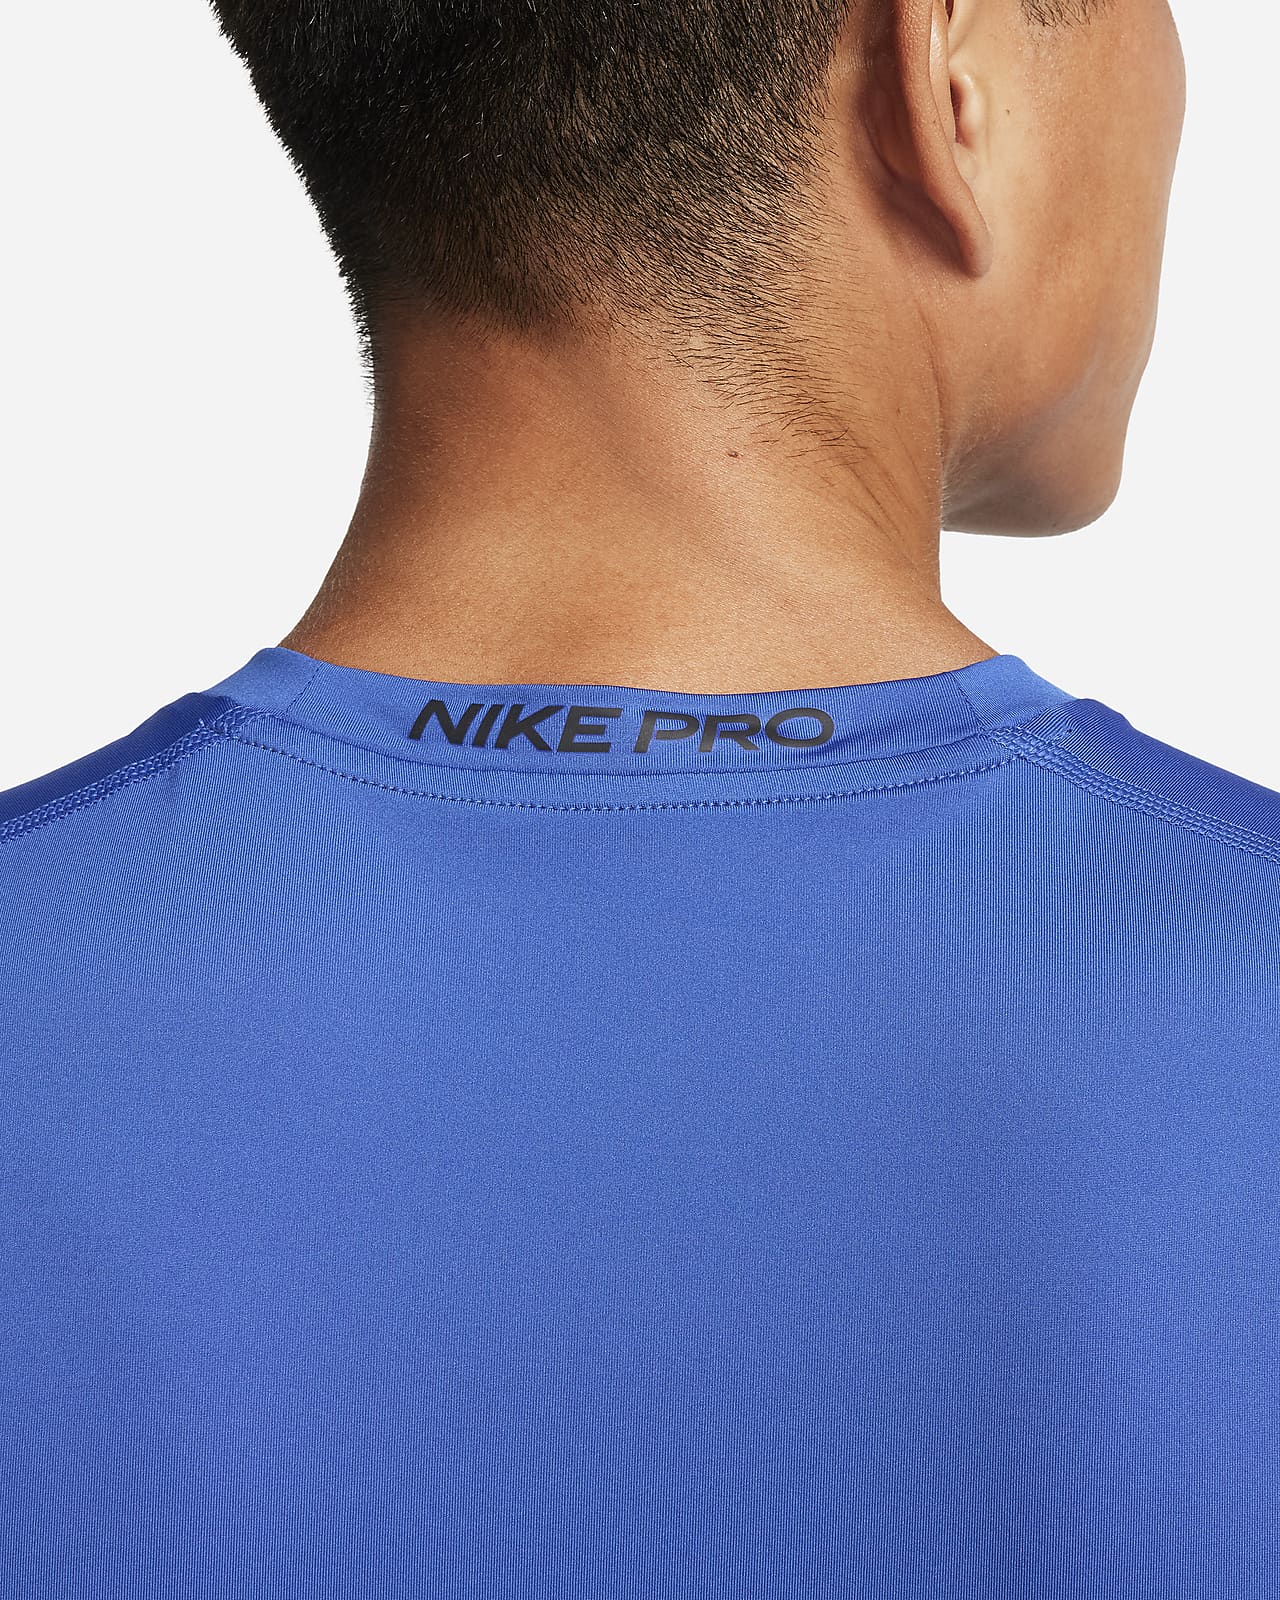  Nike Mens Pro Sleeveless Fitted Training Tee (Large